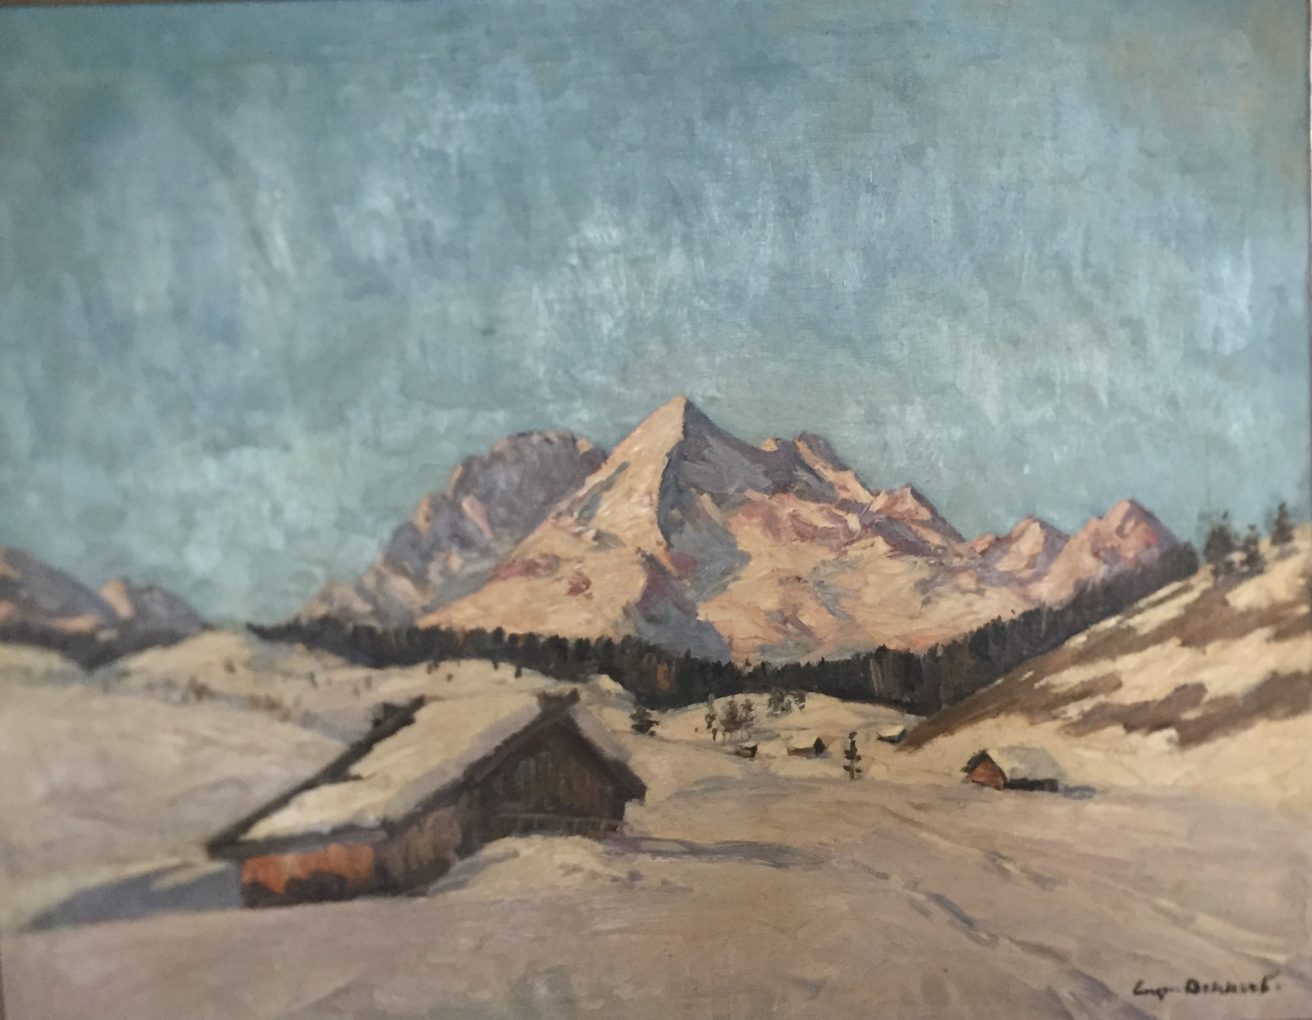 Eugen Dekkert, In den Alpen kommt der frühe Frühling, nicht datiert, Öl auf Leinwand, Eigentum des Antiquitätengeschäfts Marek Wyłupek